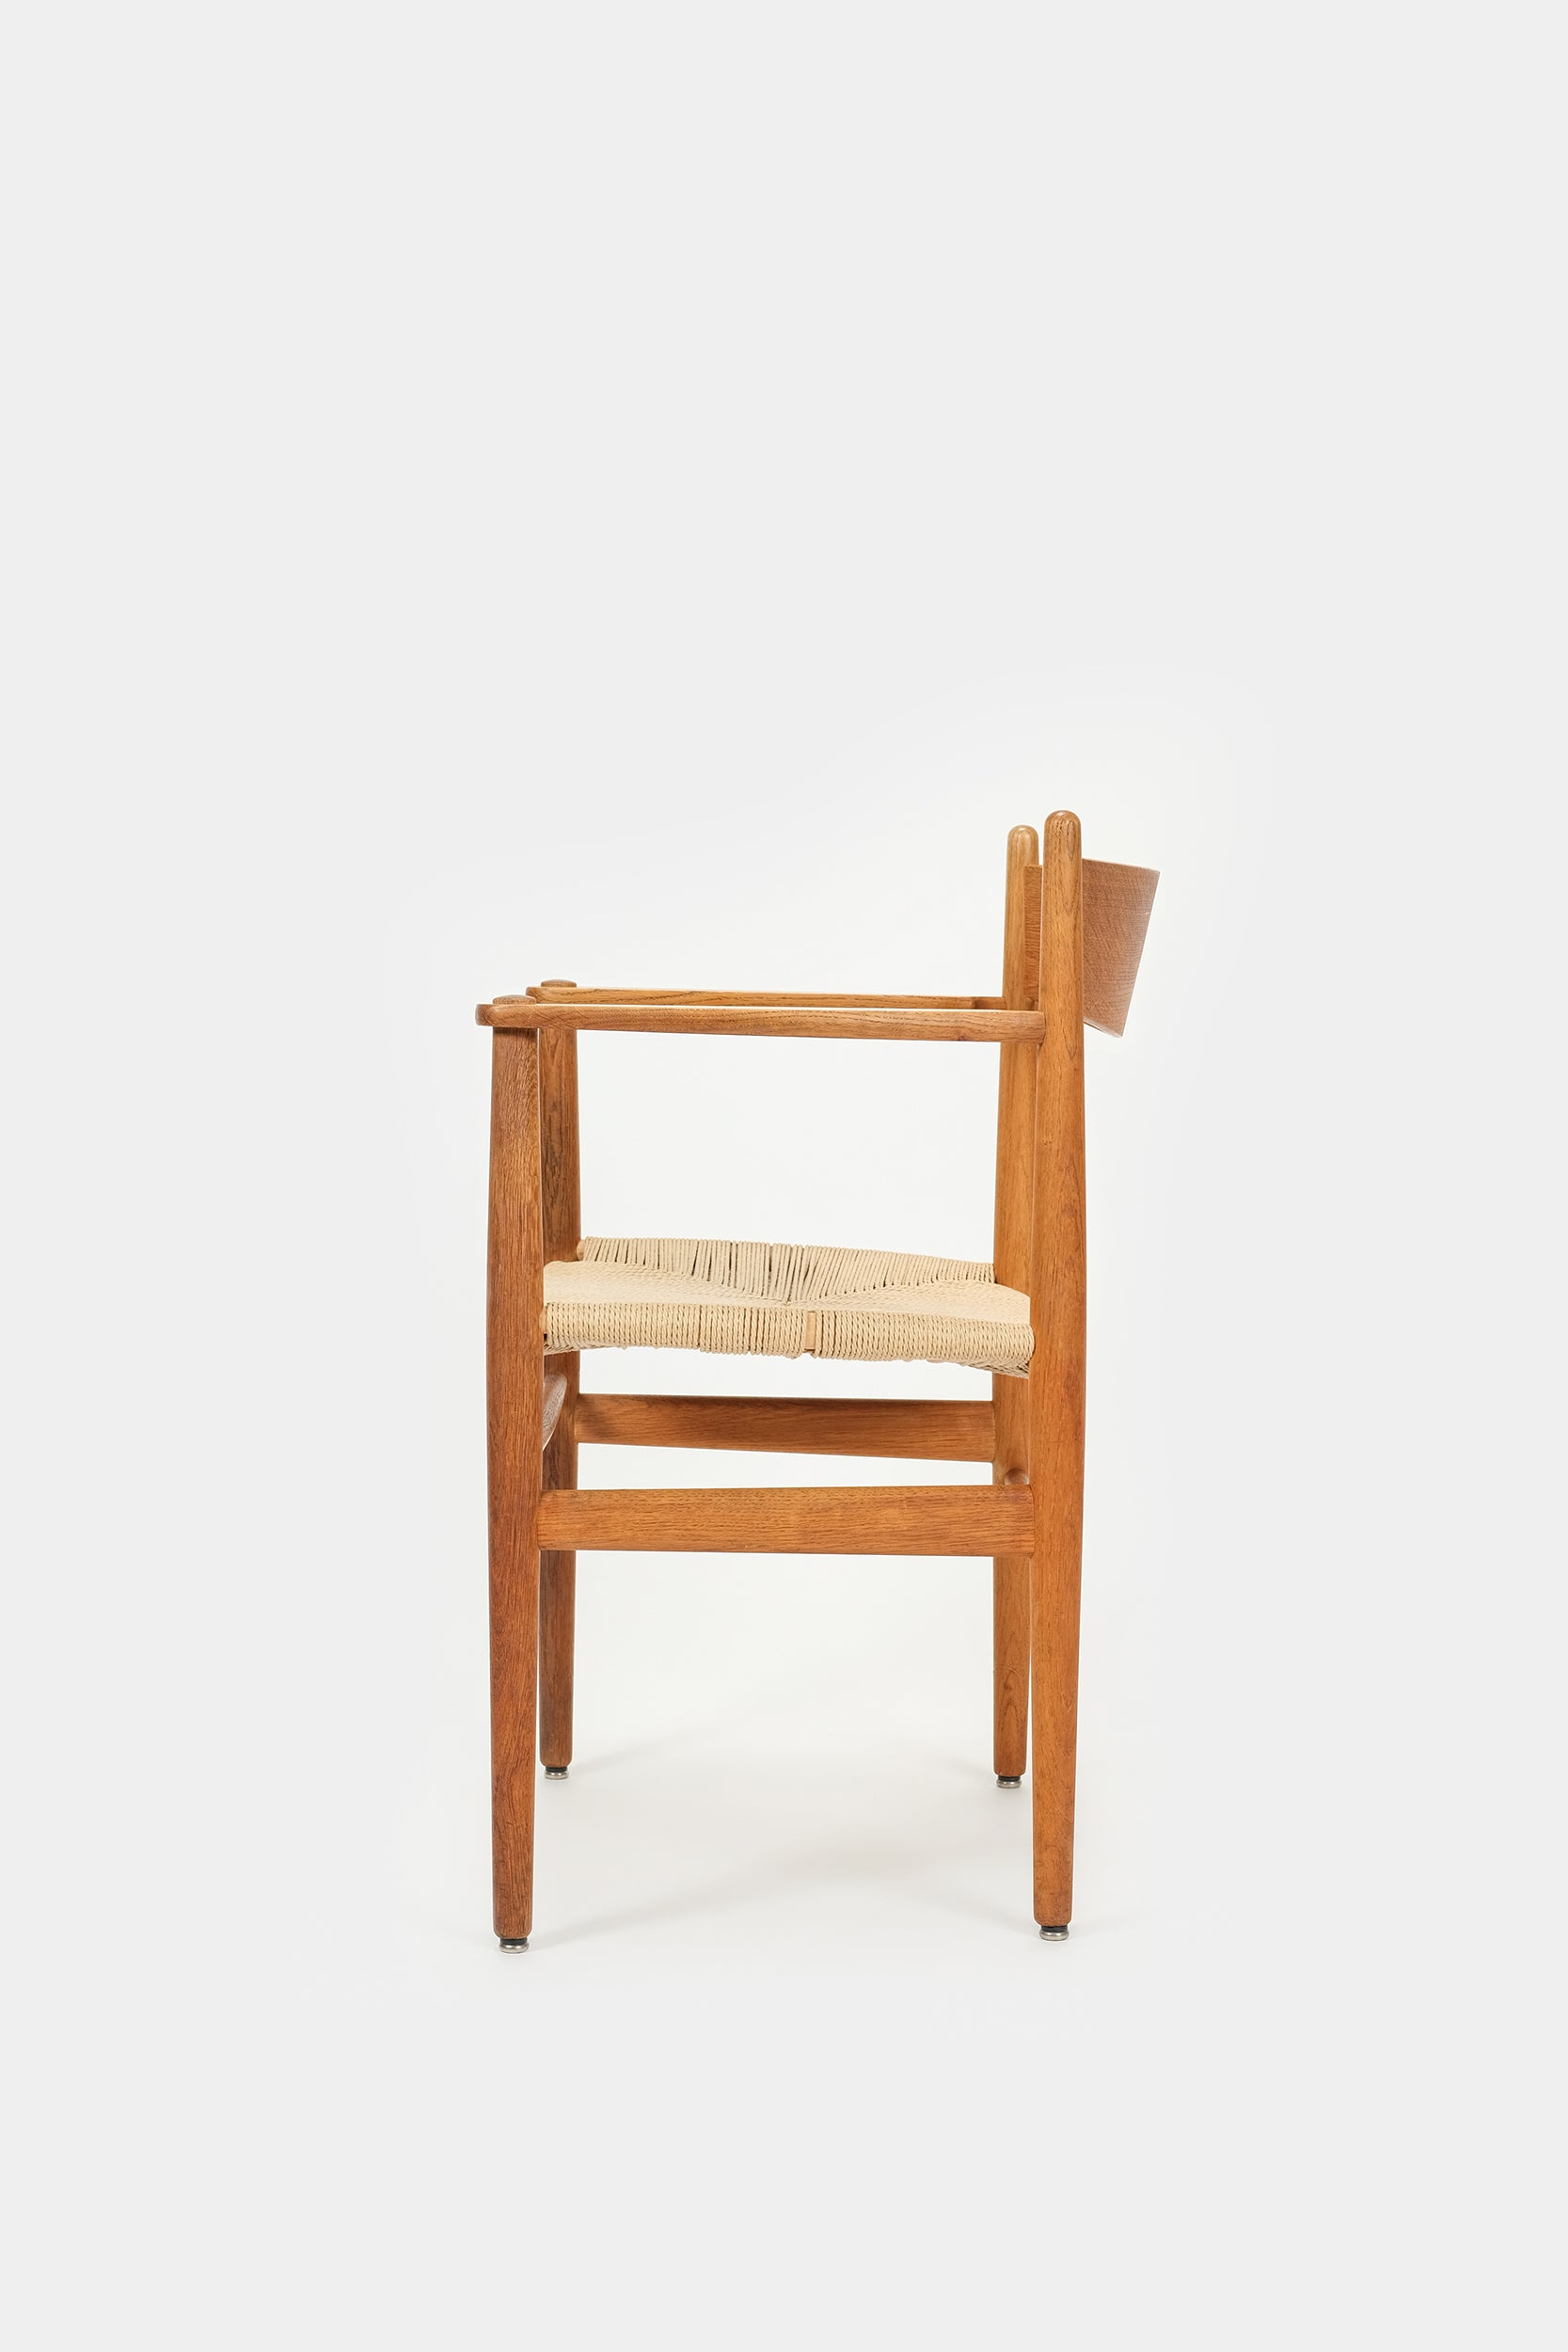 Hans Wegner Oak chair, Carl Hansen 37, 60s